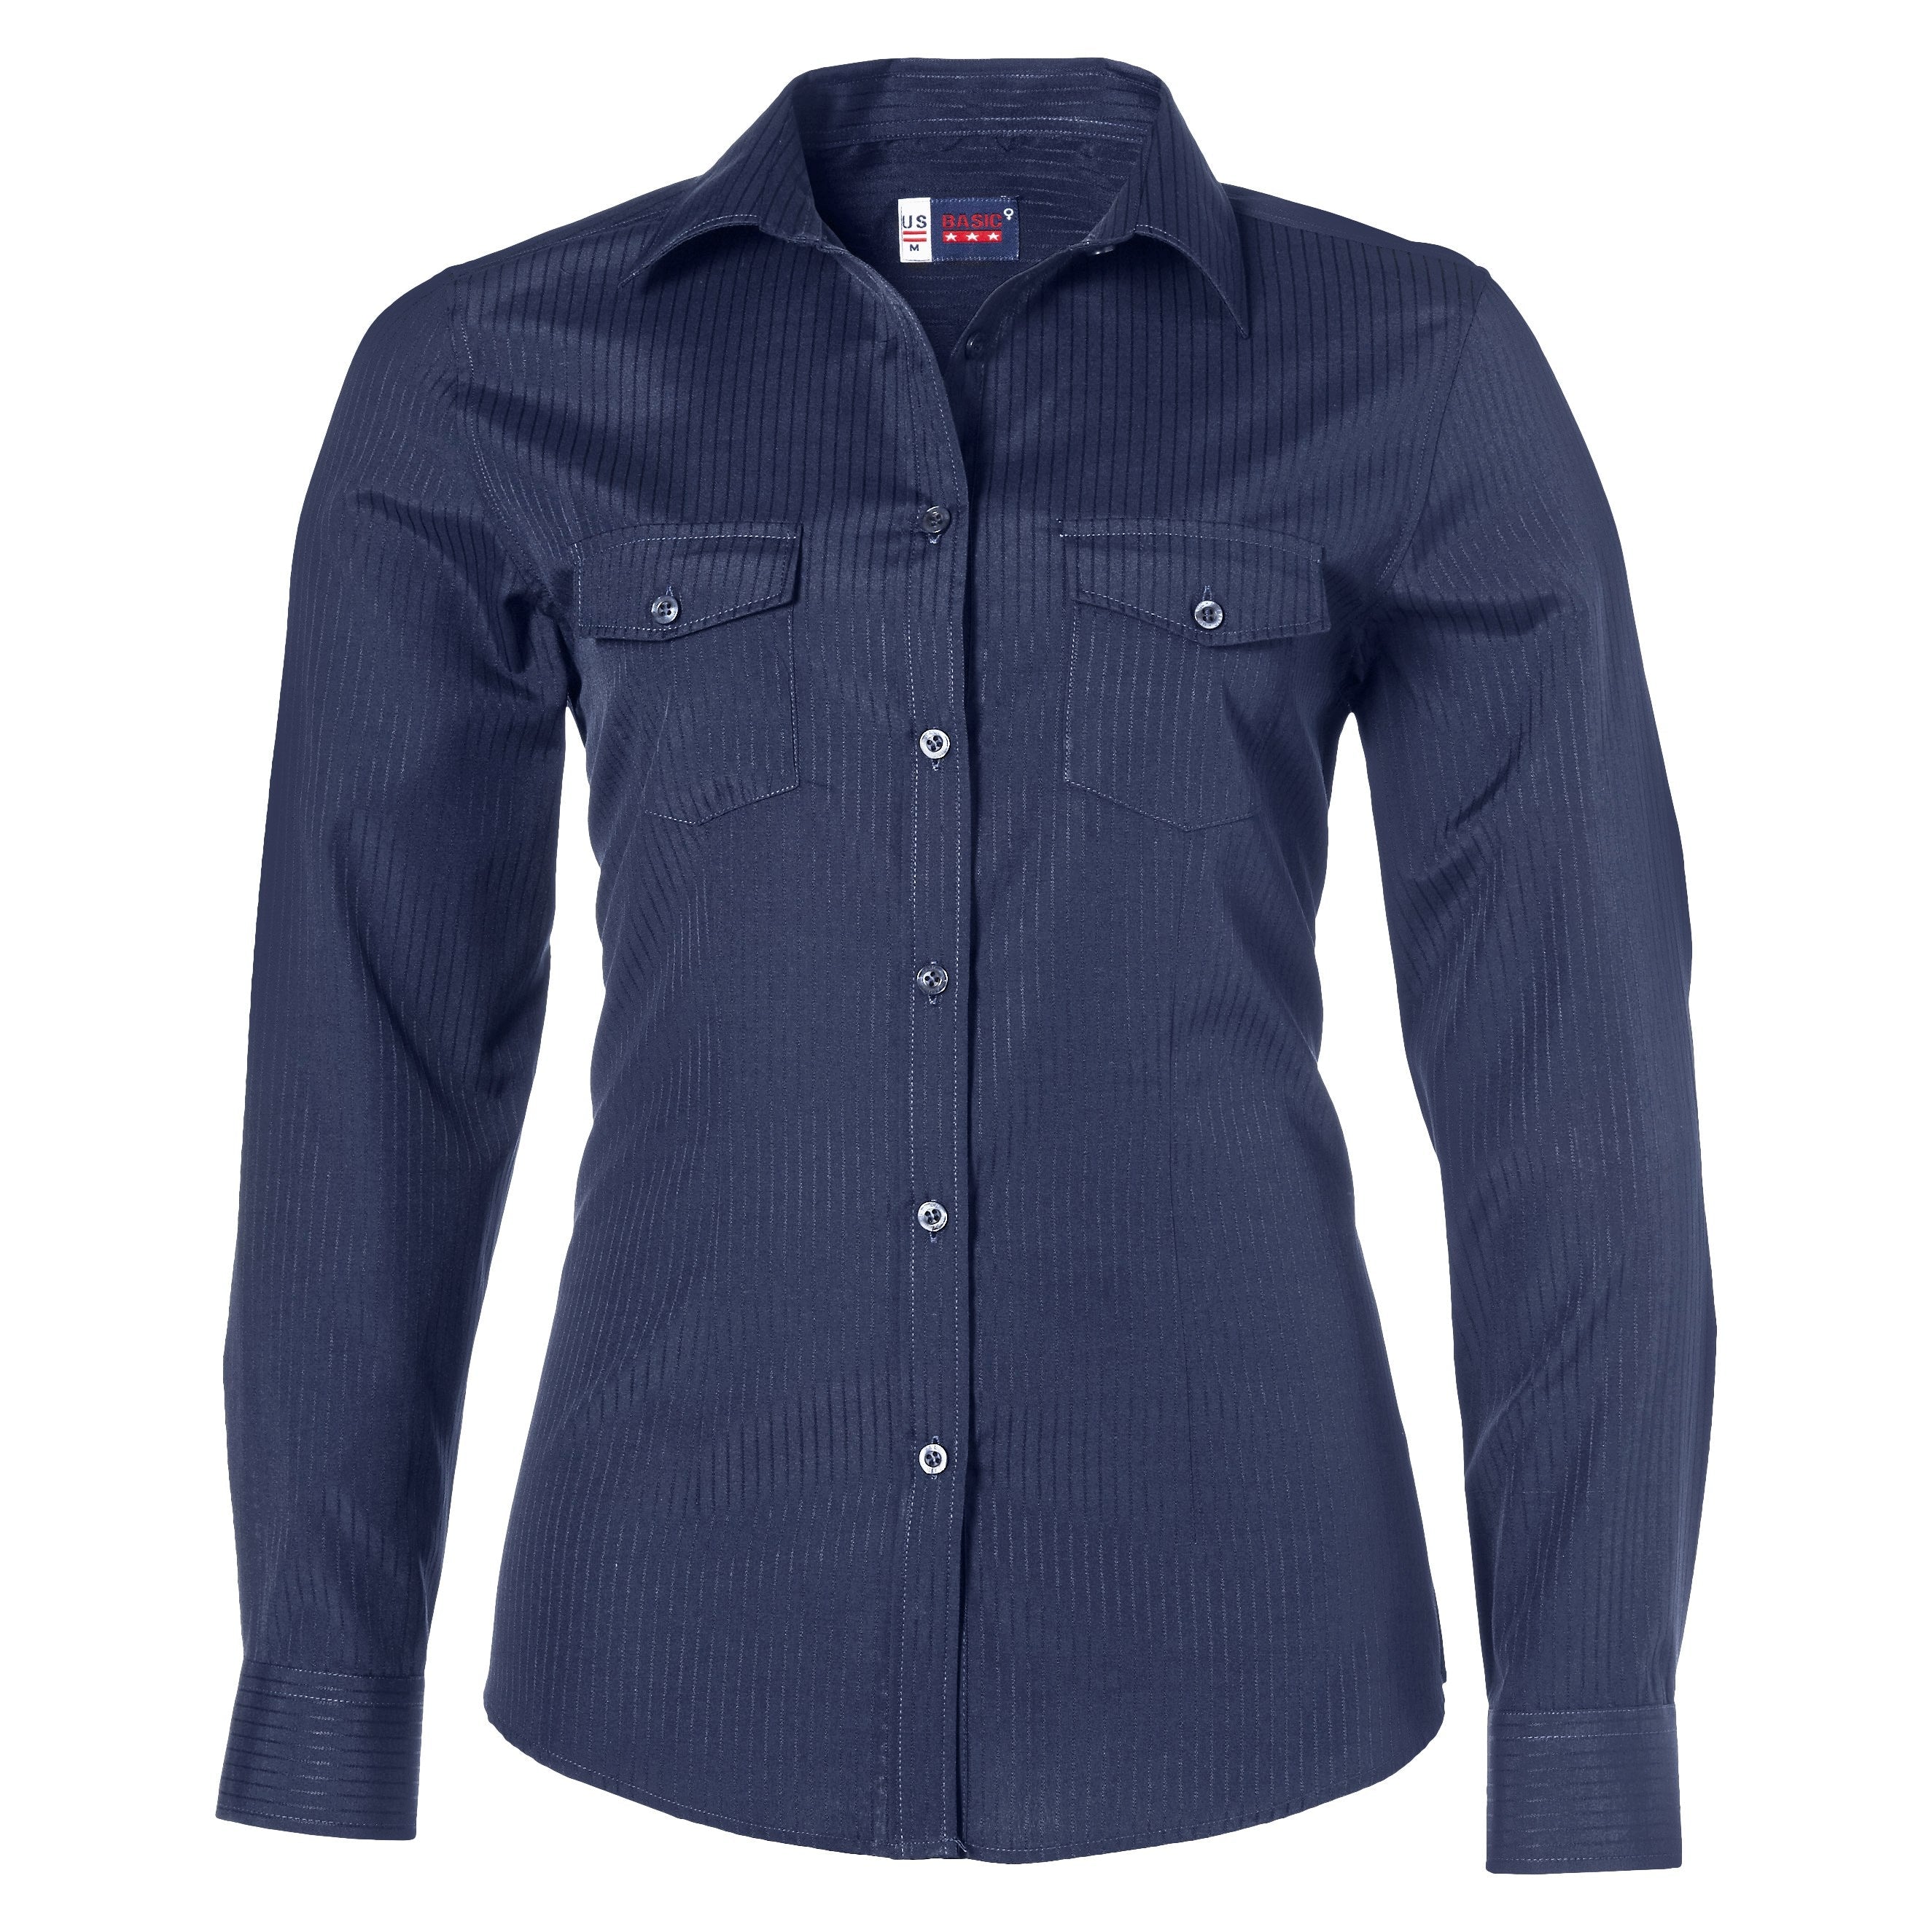 Ladies Long Sleeve Bayport Shirt - Black Only-2XL-Navy-N